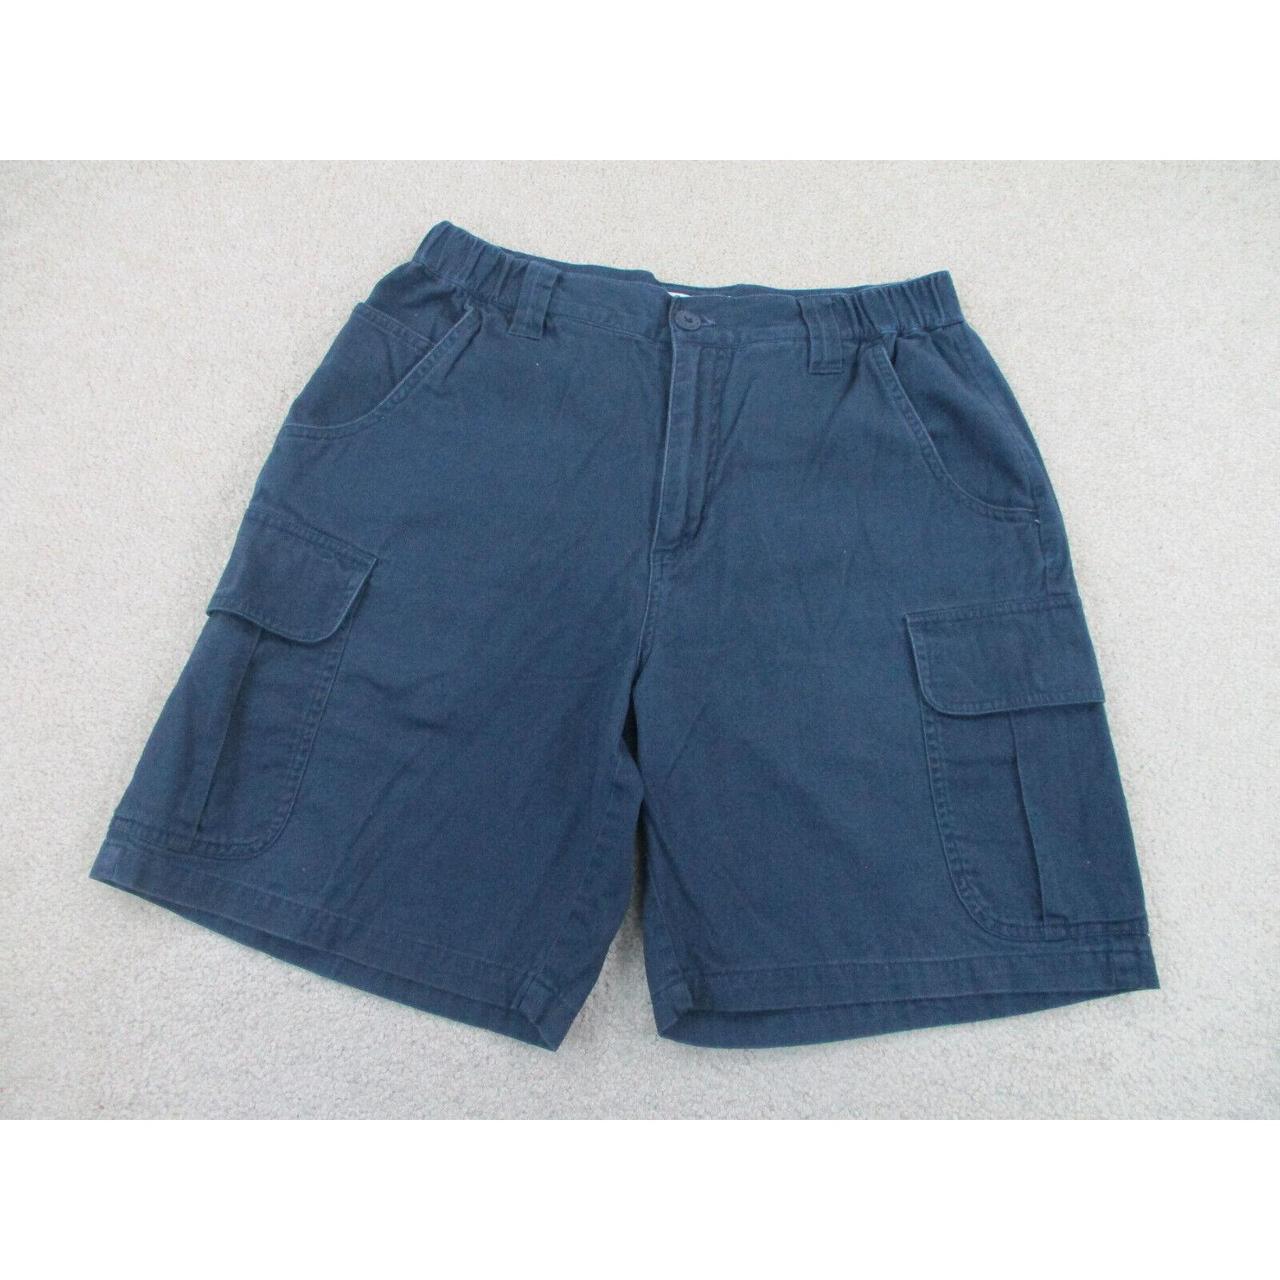 Product Image 2 - Columbia Shorts Men 30 Blue